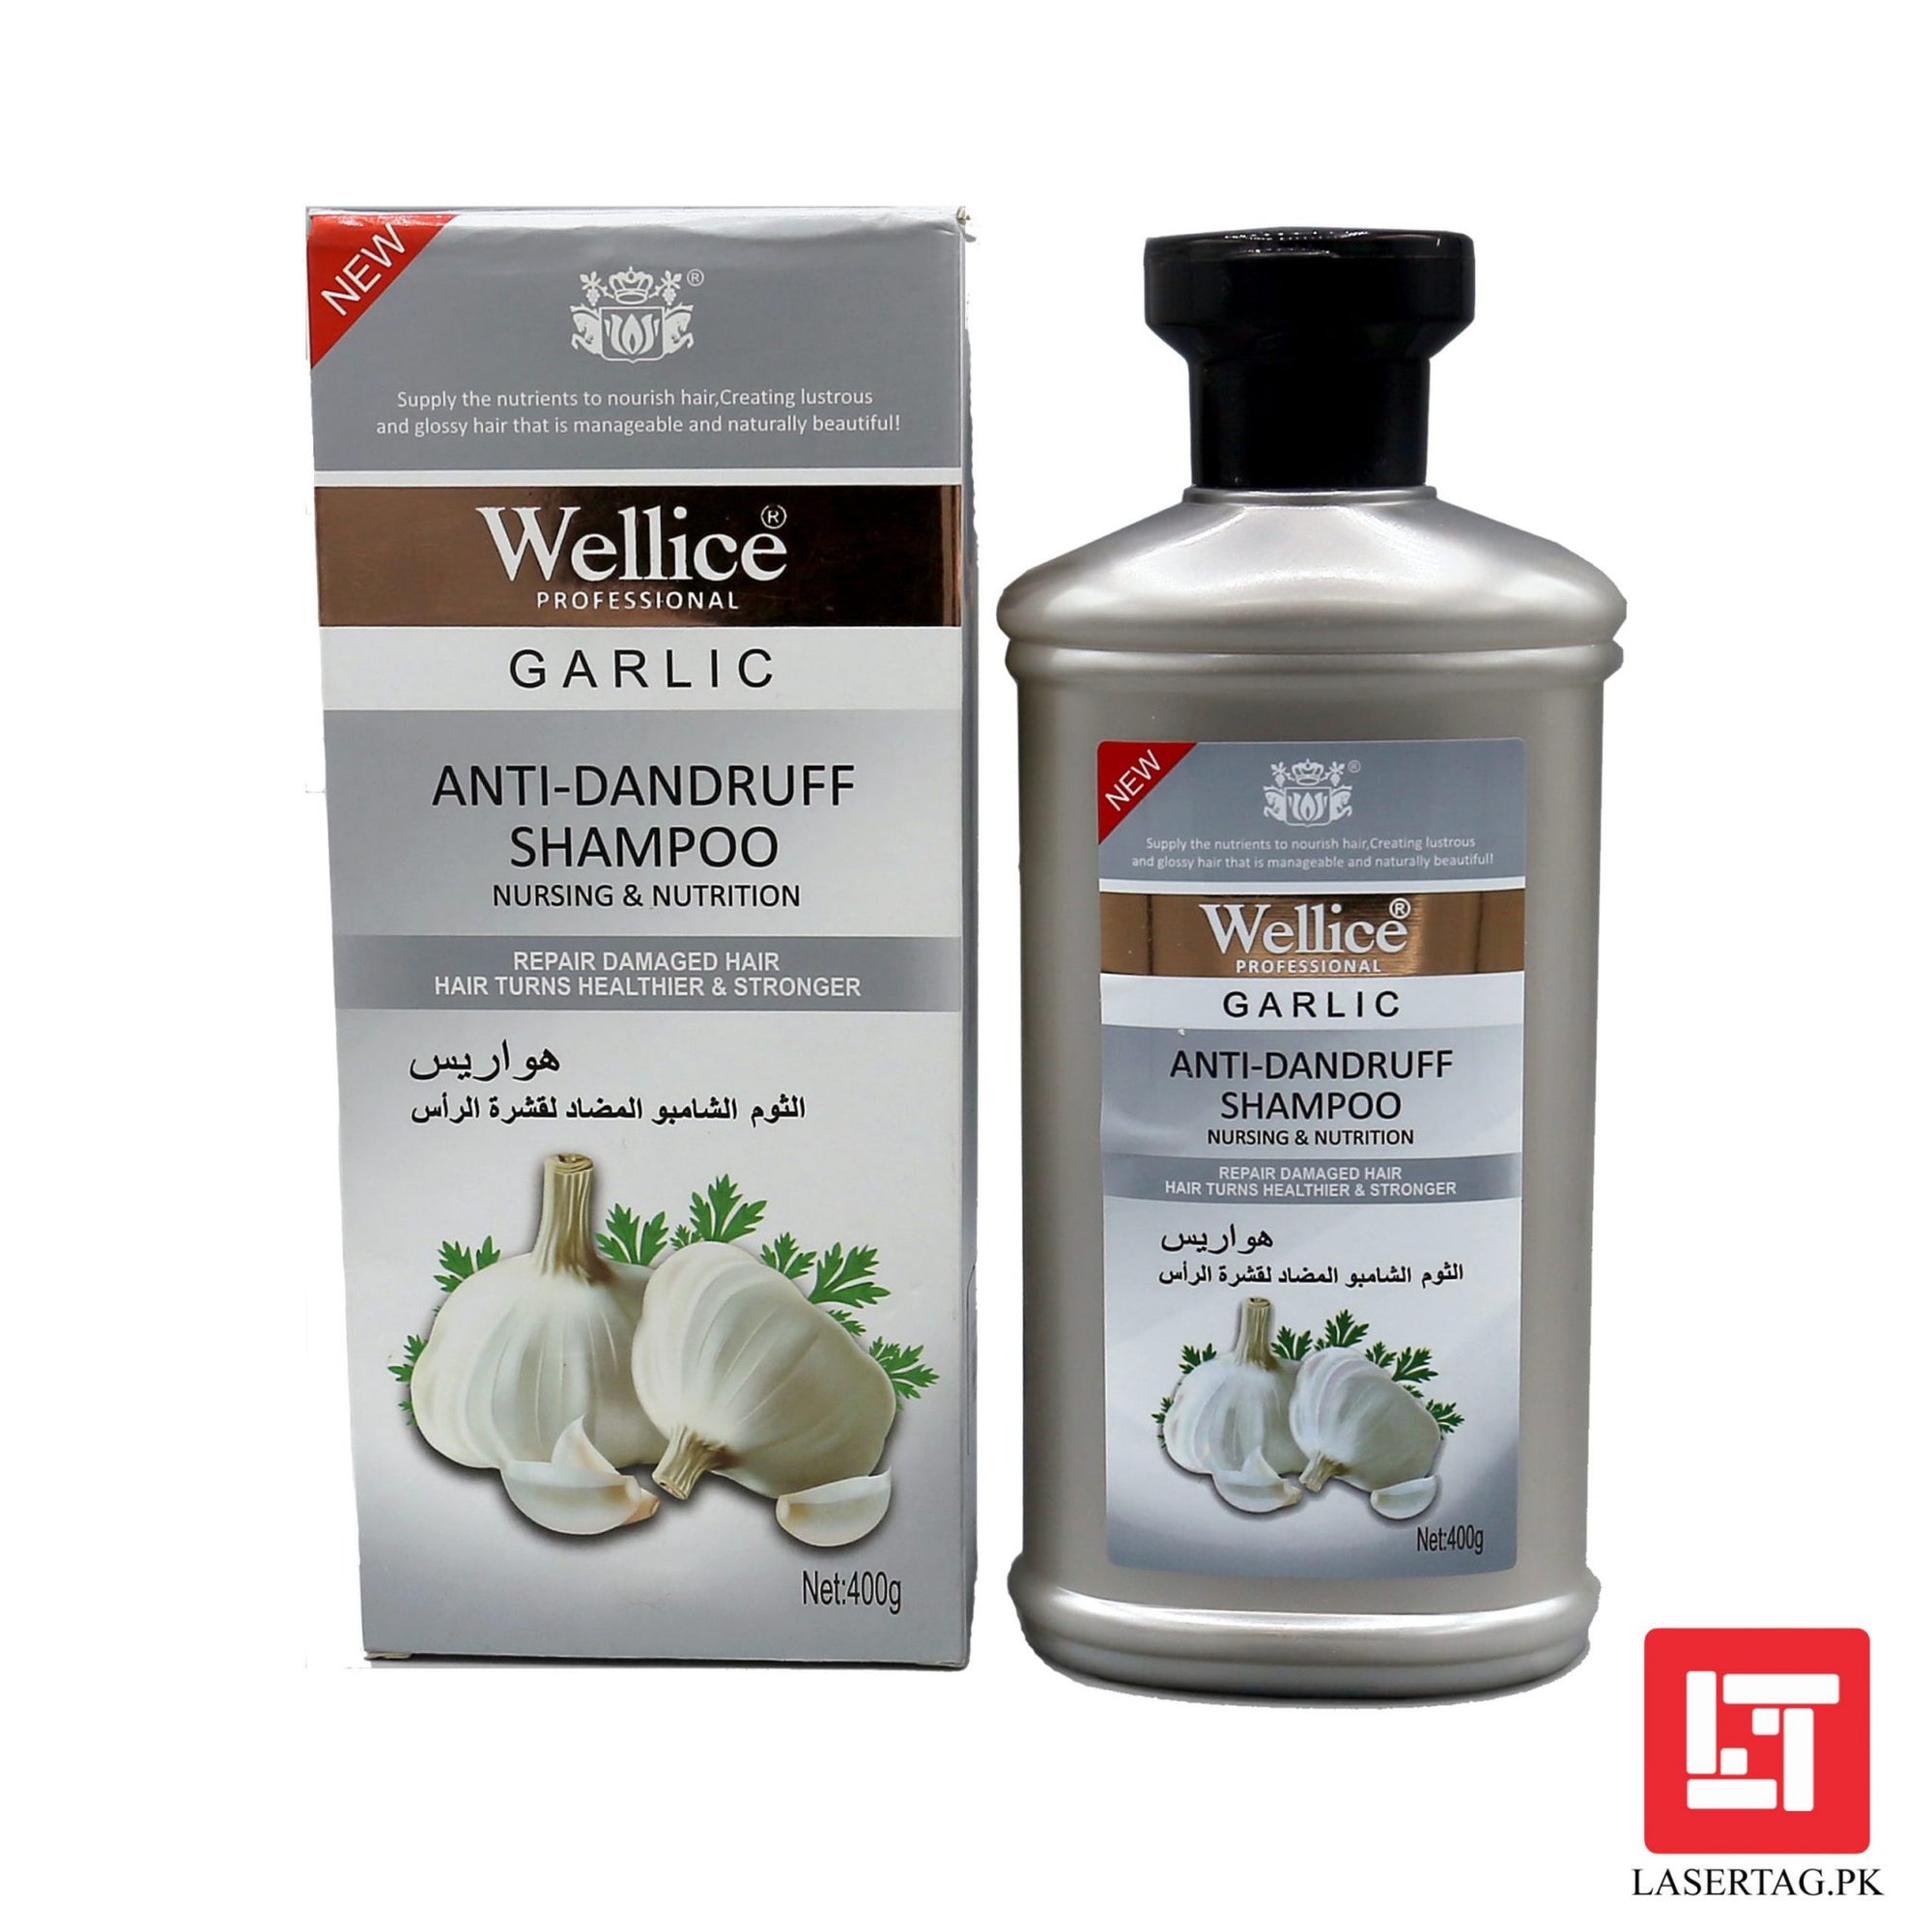 Wellice Garlic Anti Dandruff Shampoo Nursing & Nutrition Repair Damged Hair Hair Turns Healthier & Stronger 400g freeshipping - lasertag.pk